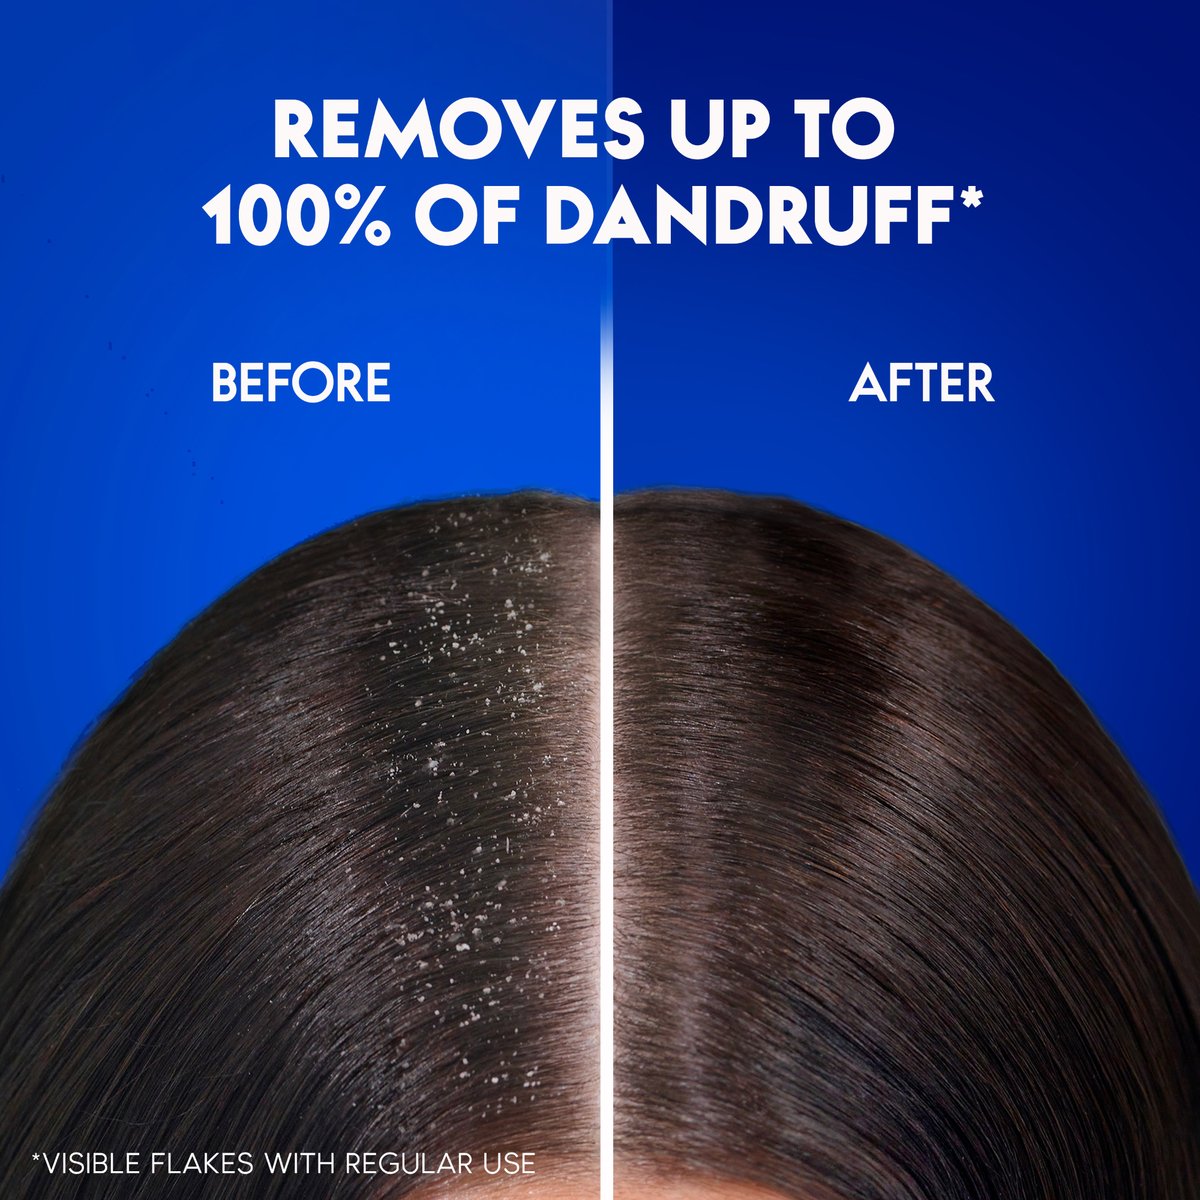 Head & Shoulders Extra Volume Anti-Dandruff Shampoo, 400 ml